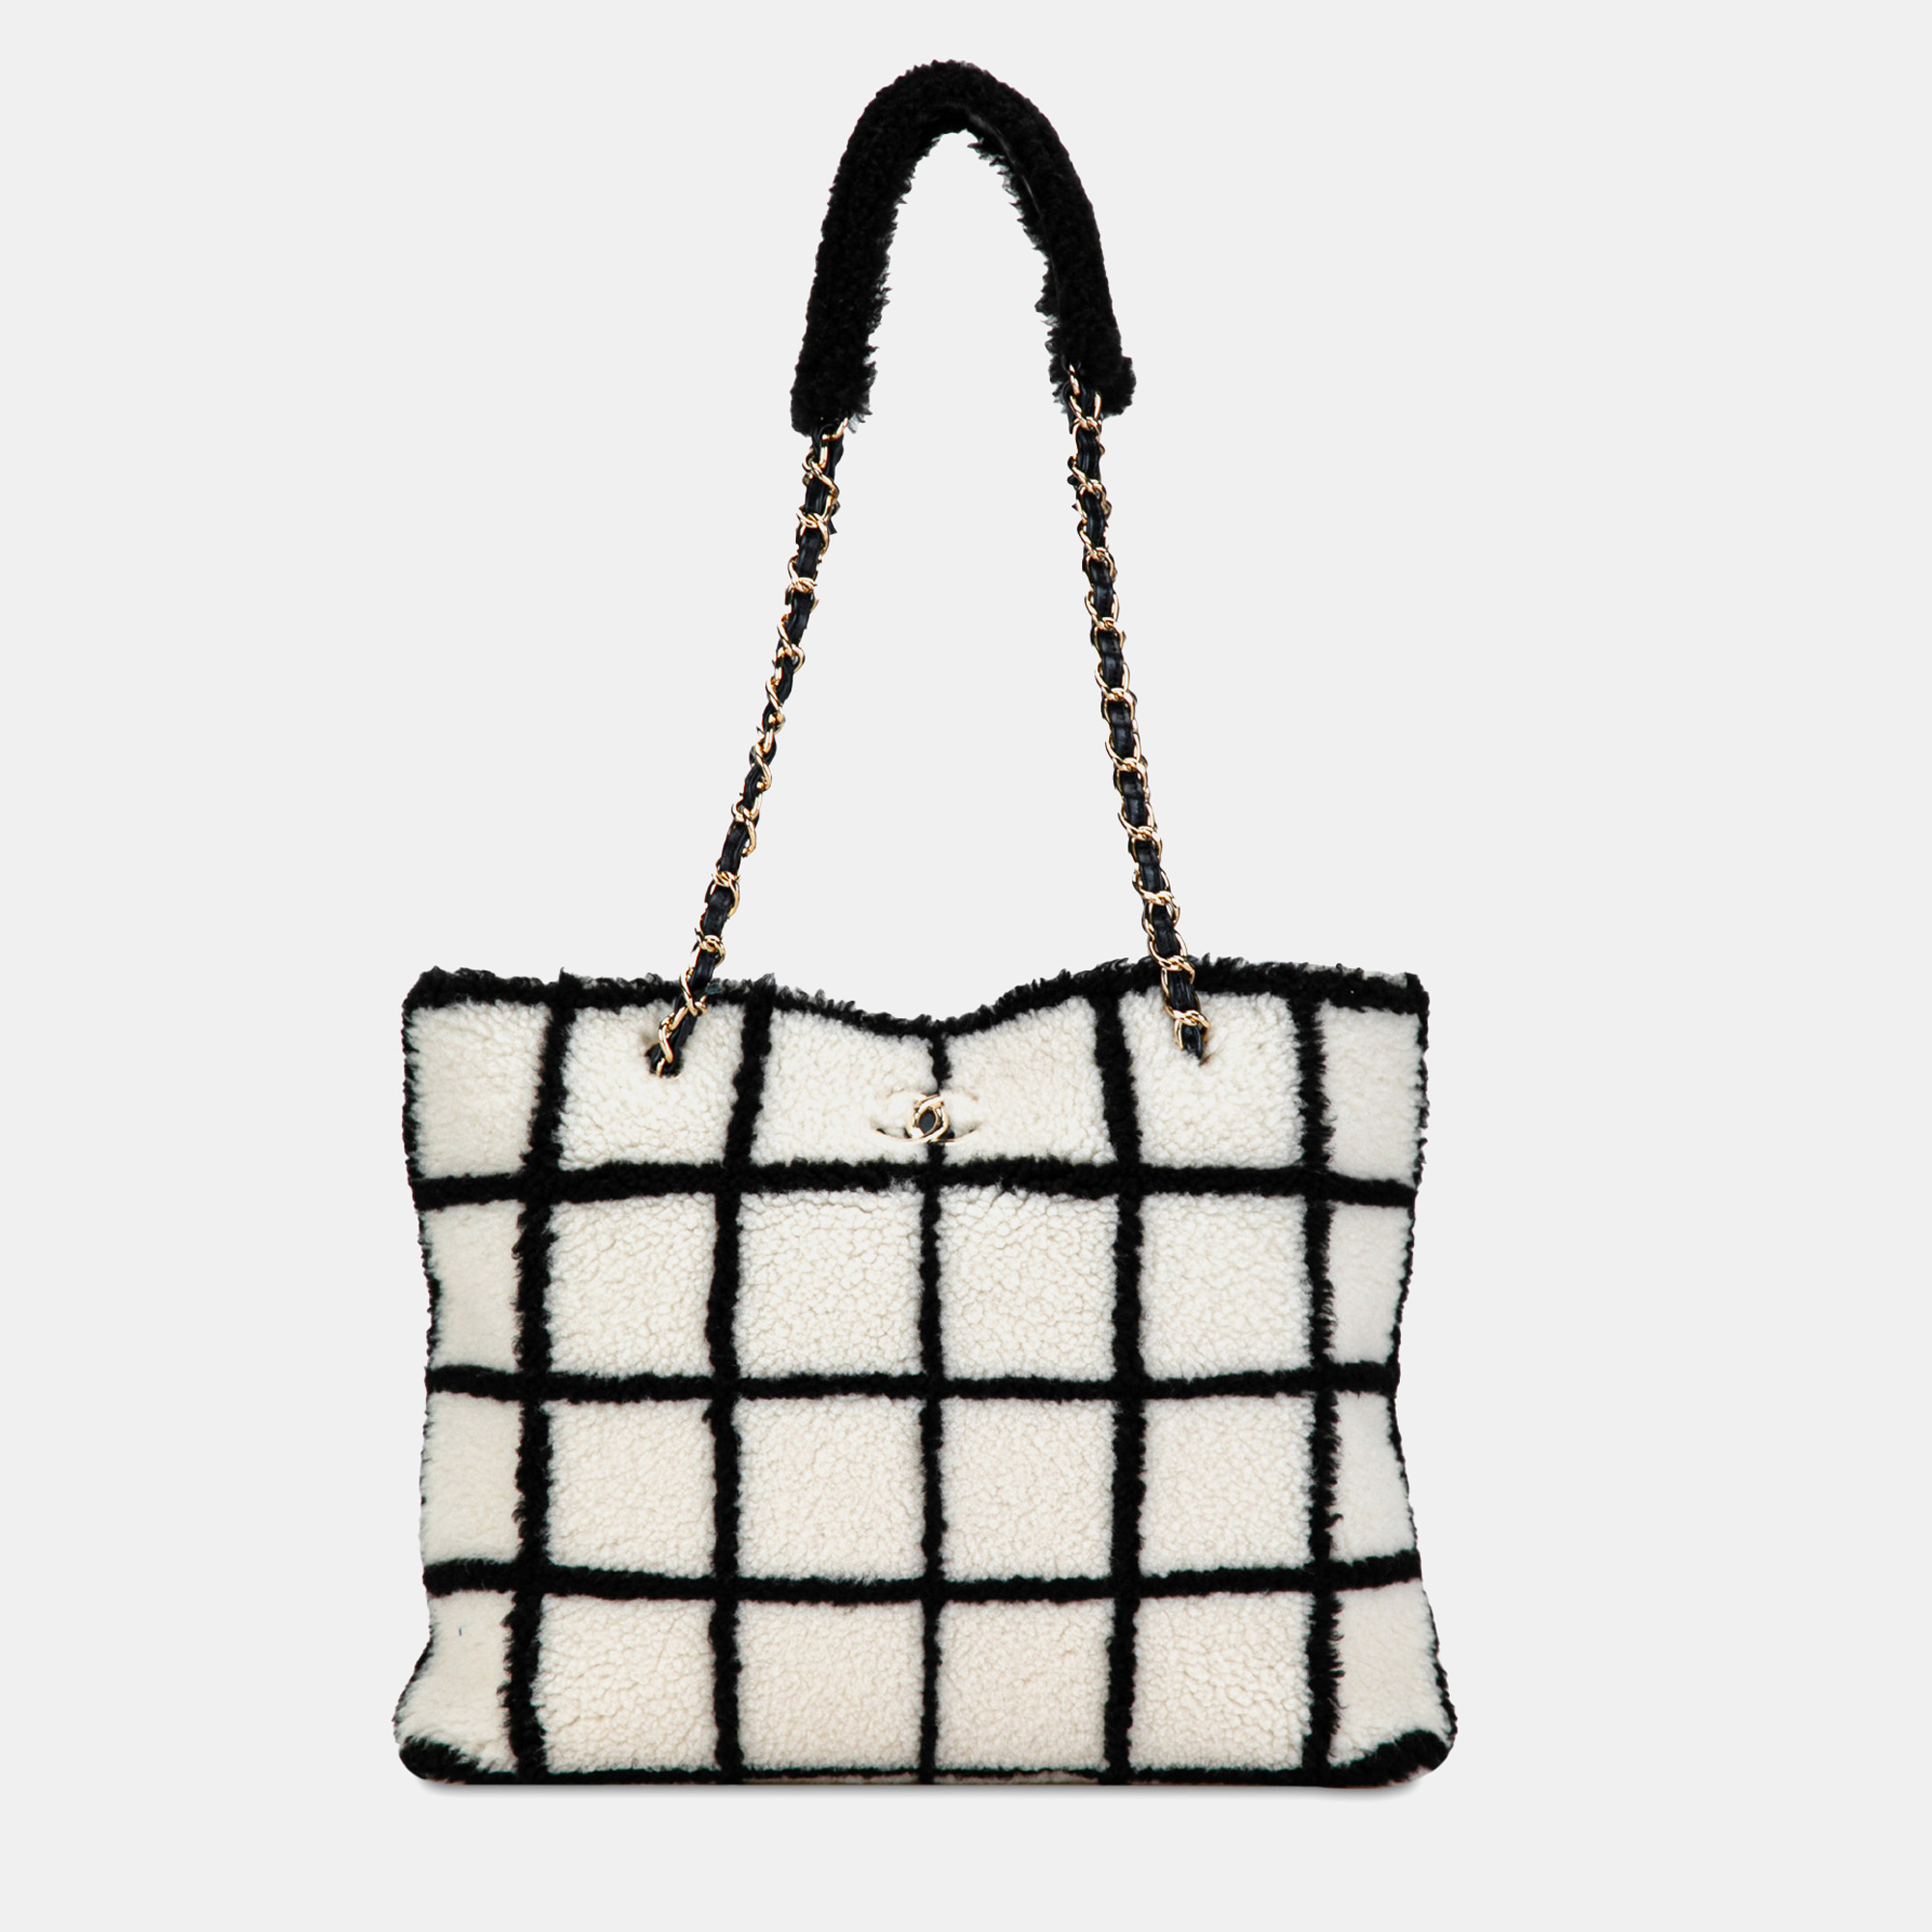 Chanel grid shearling shopping tote